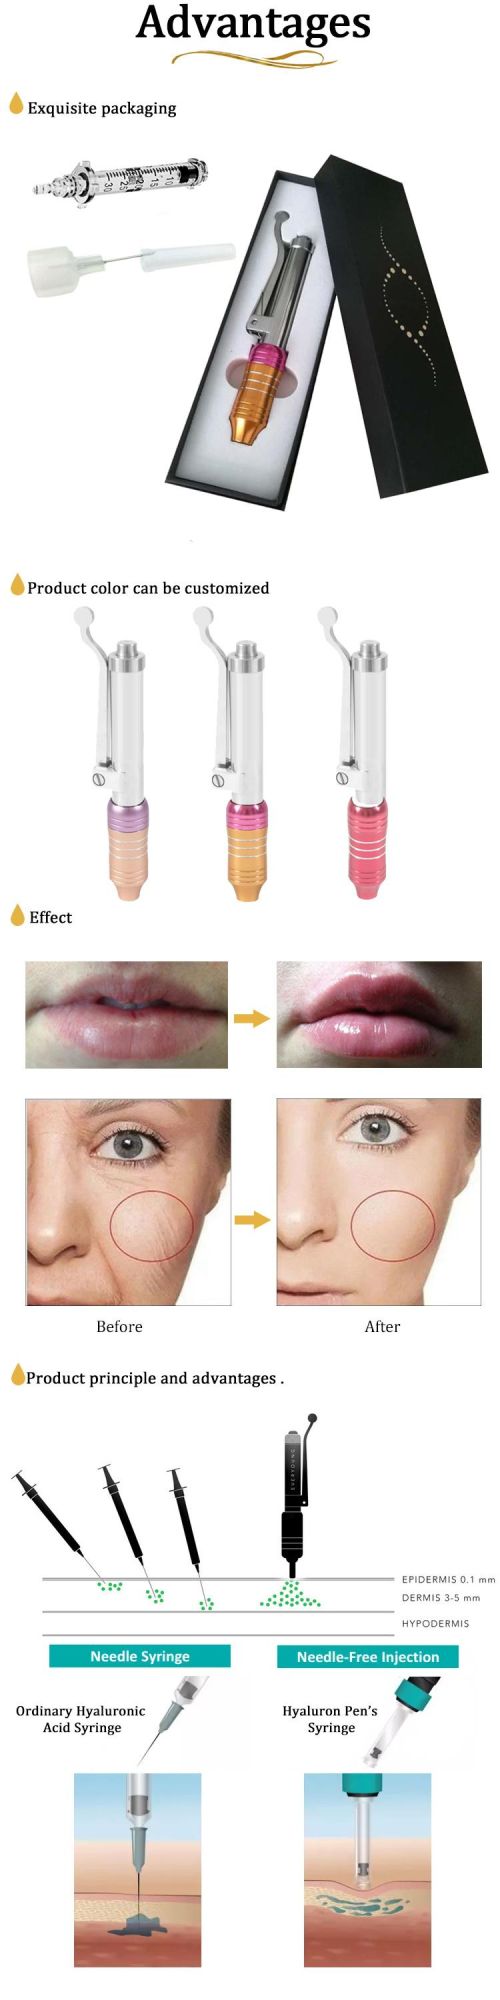 Top Sale Free Needle Lips Improve Gel Hyaluronic Acid Filler Crossedlink Injectable Hyaluronic Pen